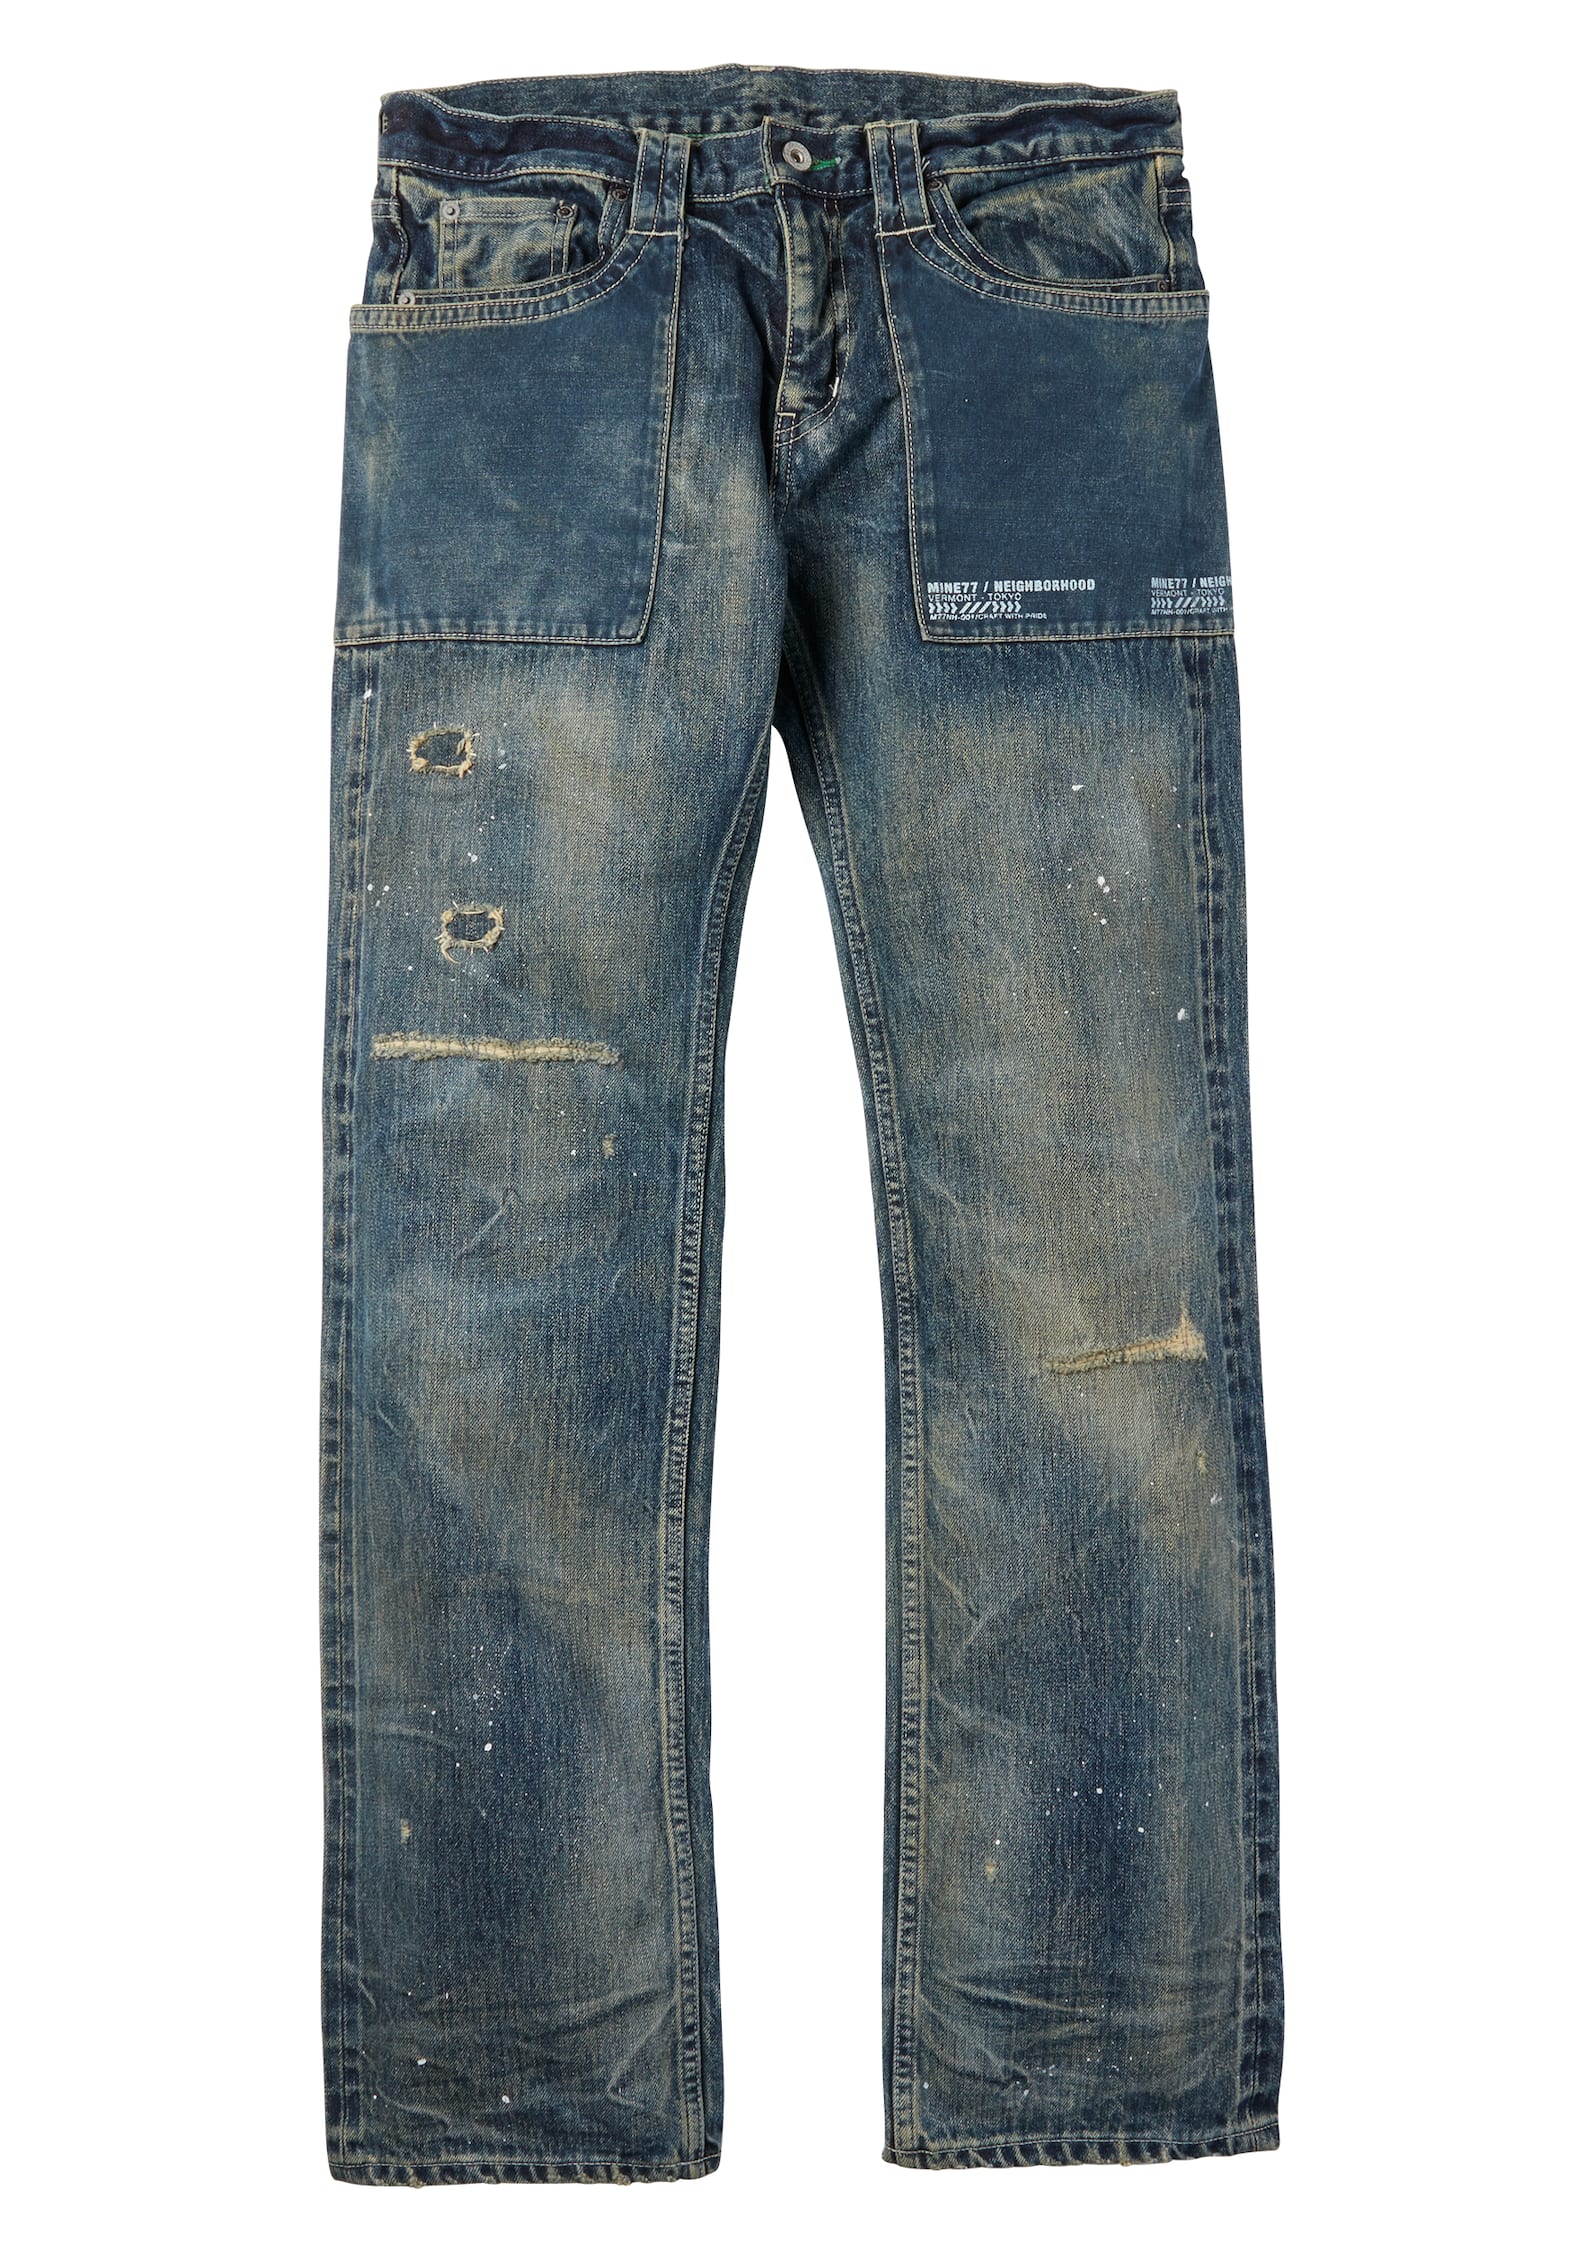 MINE77 x NEIGHBORHOOD Selvedge Jeans | Burton.com Winter 2021 US